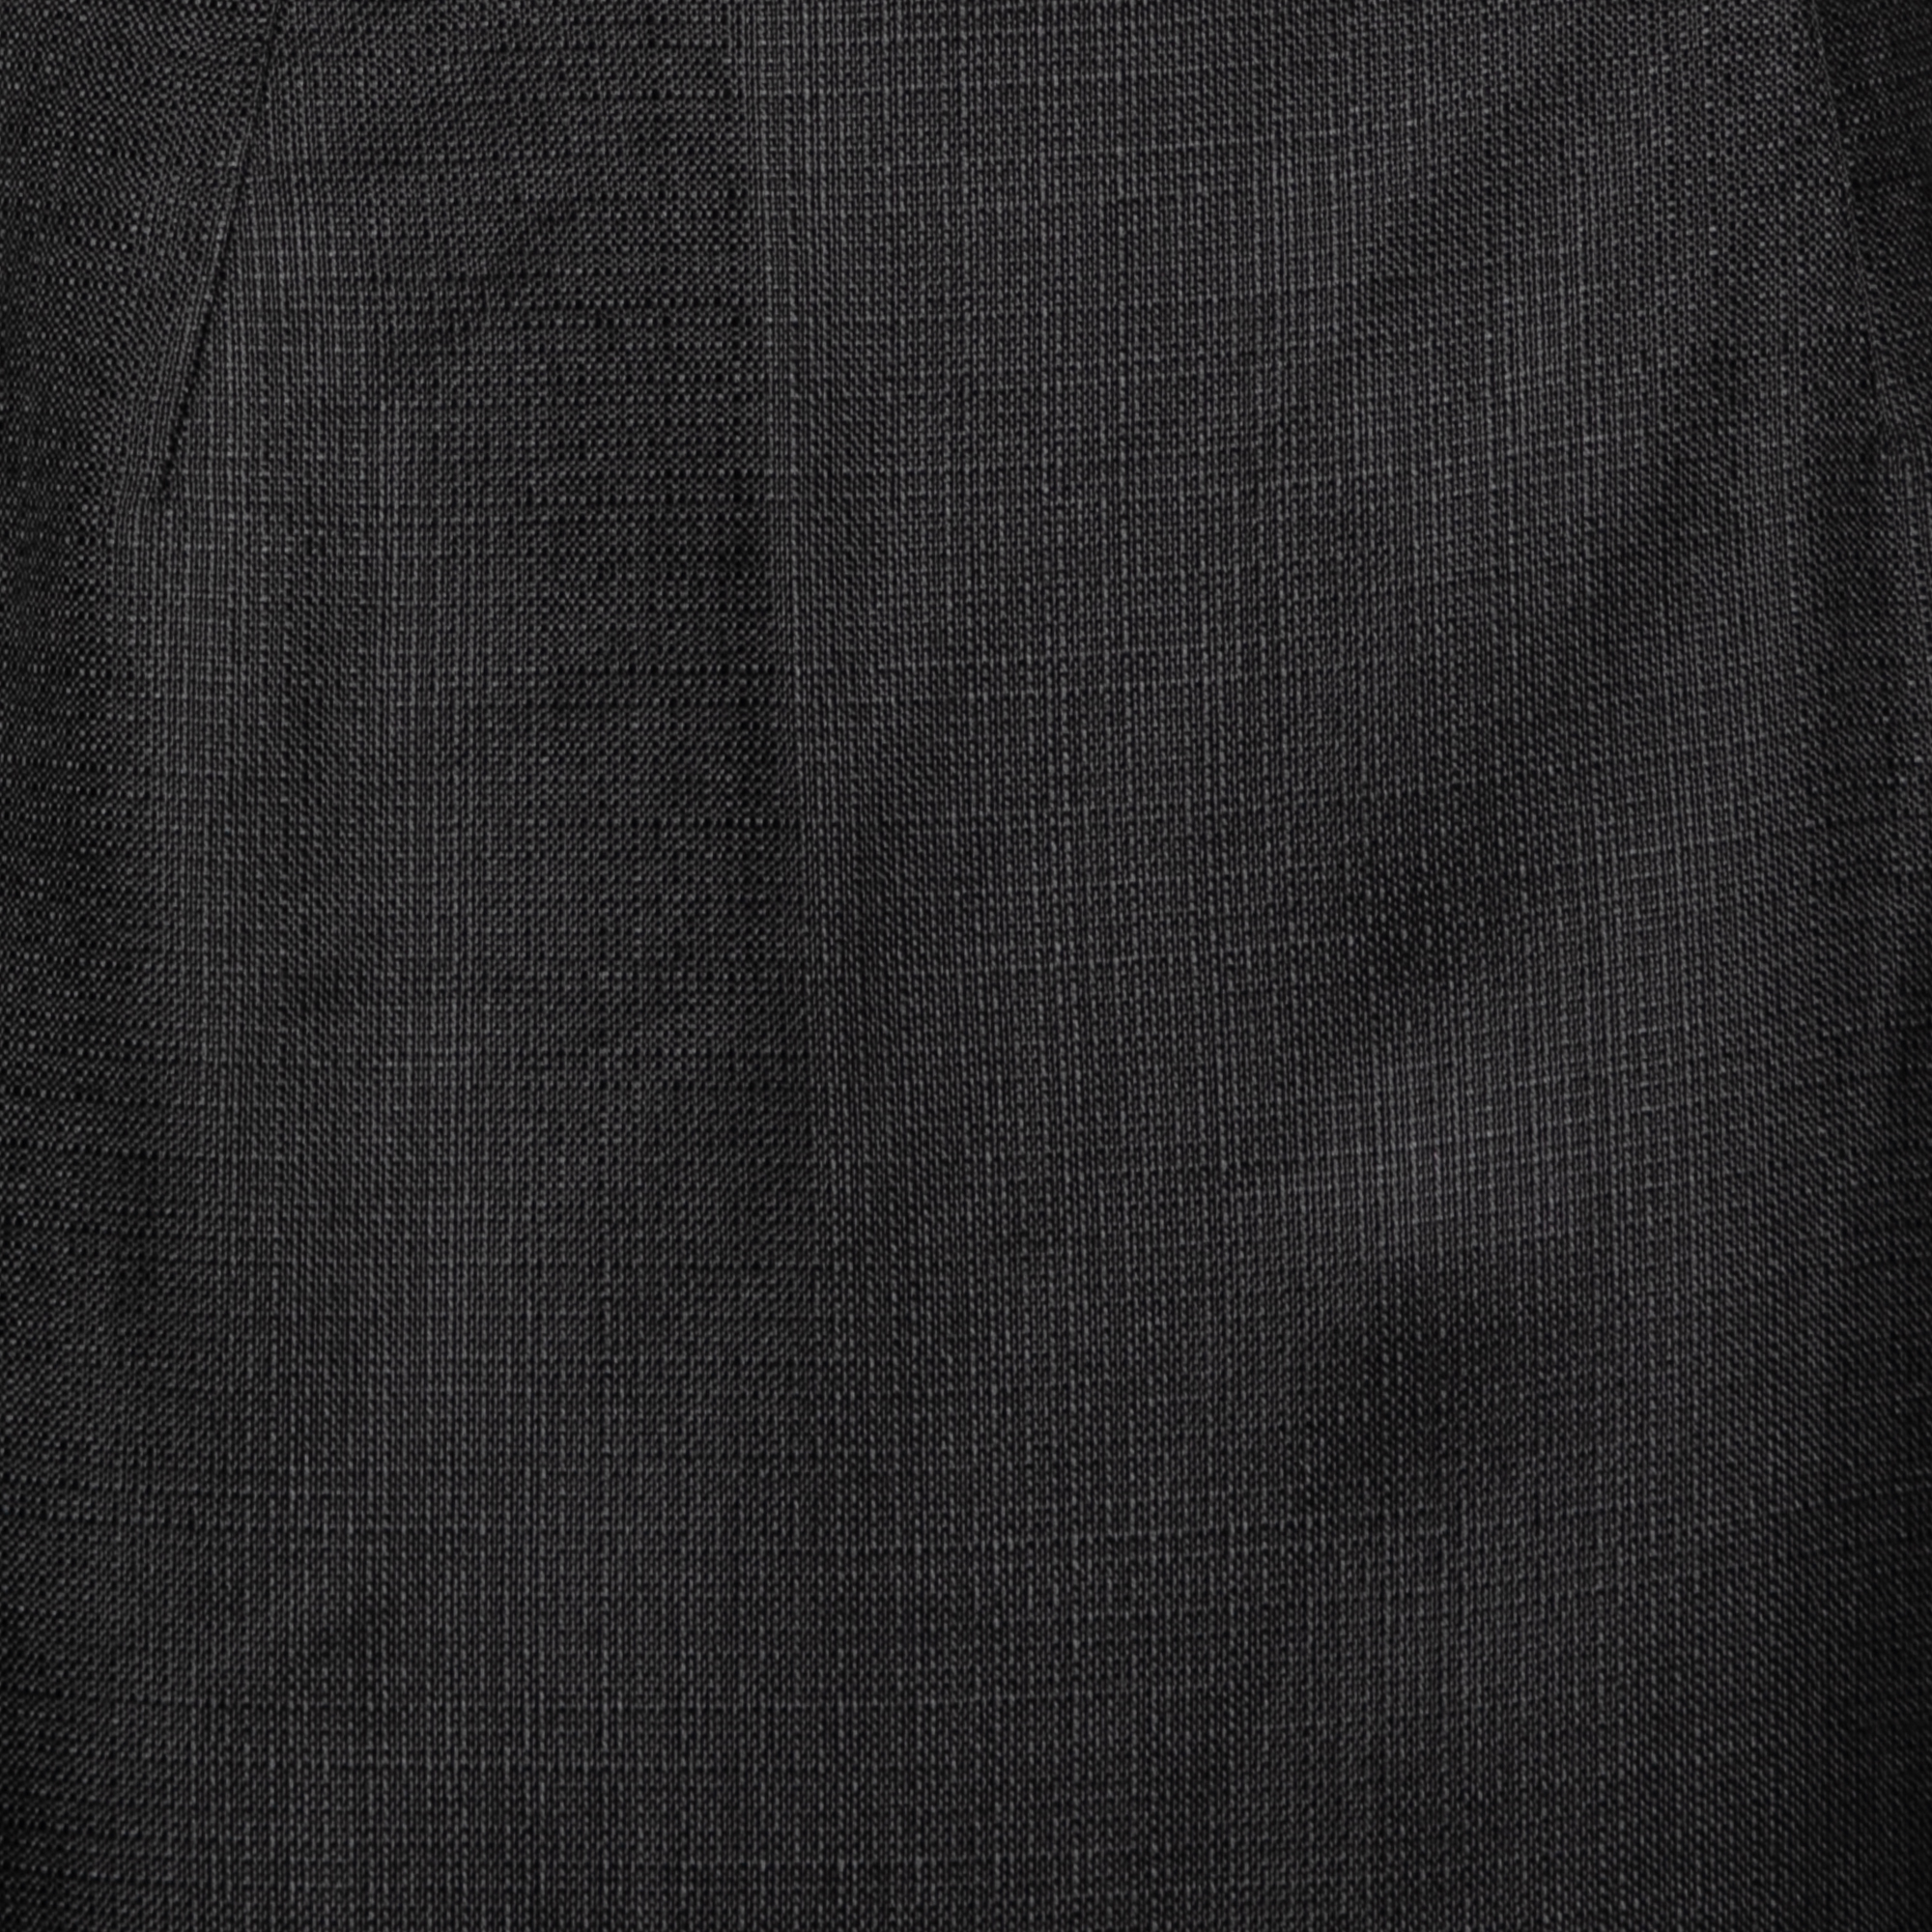 Dolce & Gabbana Black Textured Crepe Pencil Skirt M